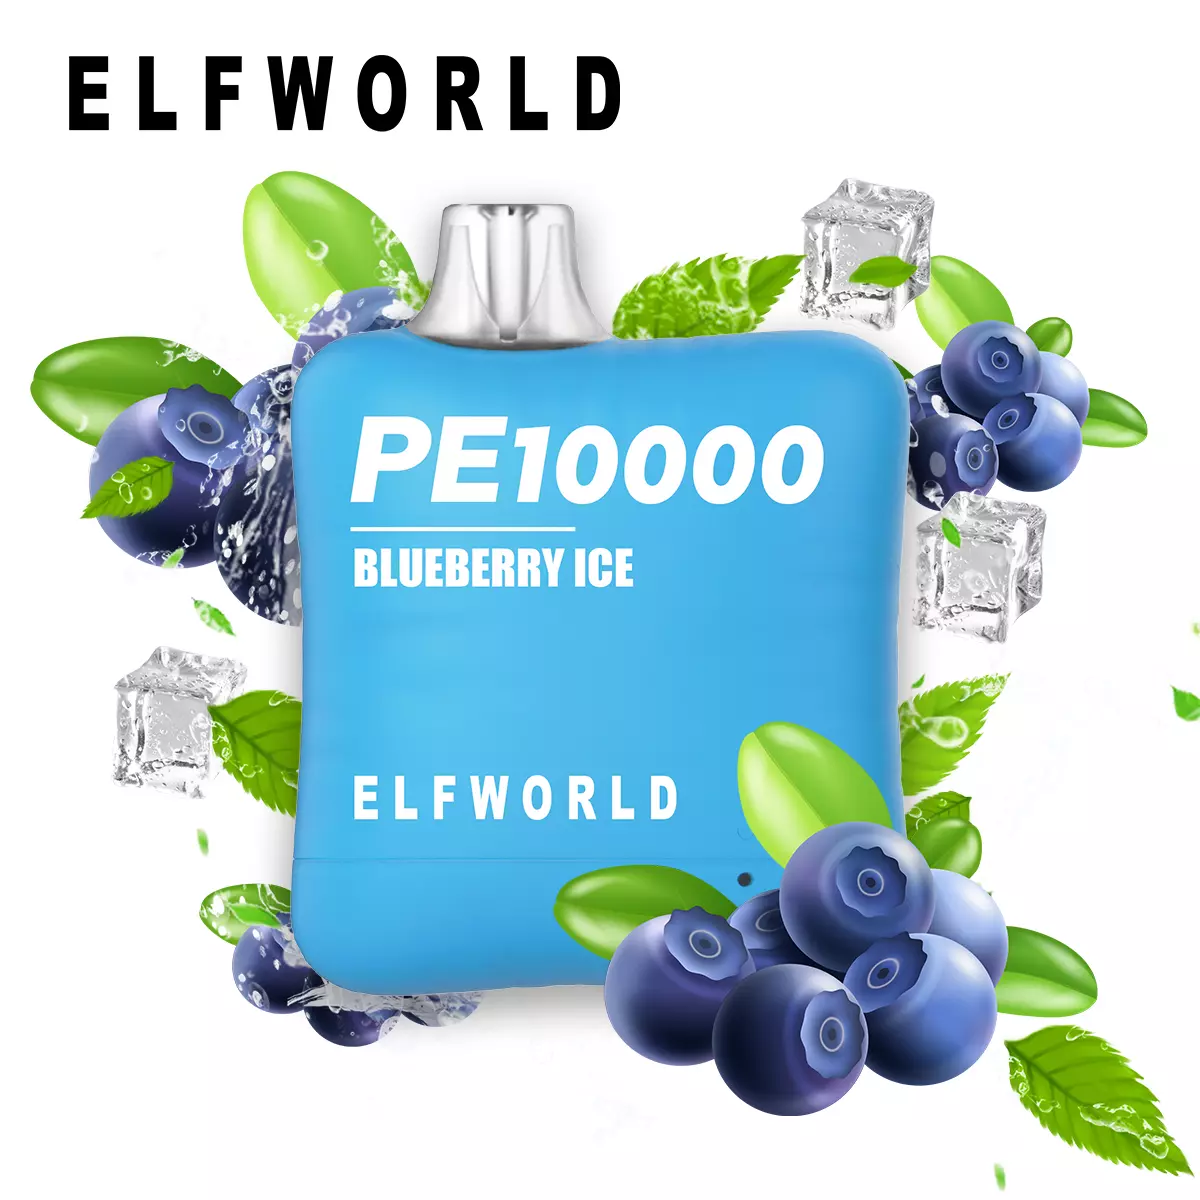 Elf World PE 10000 Blueberry Ice